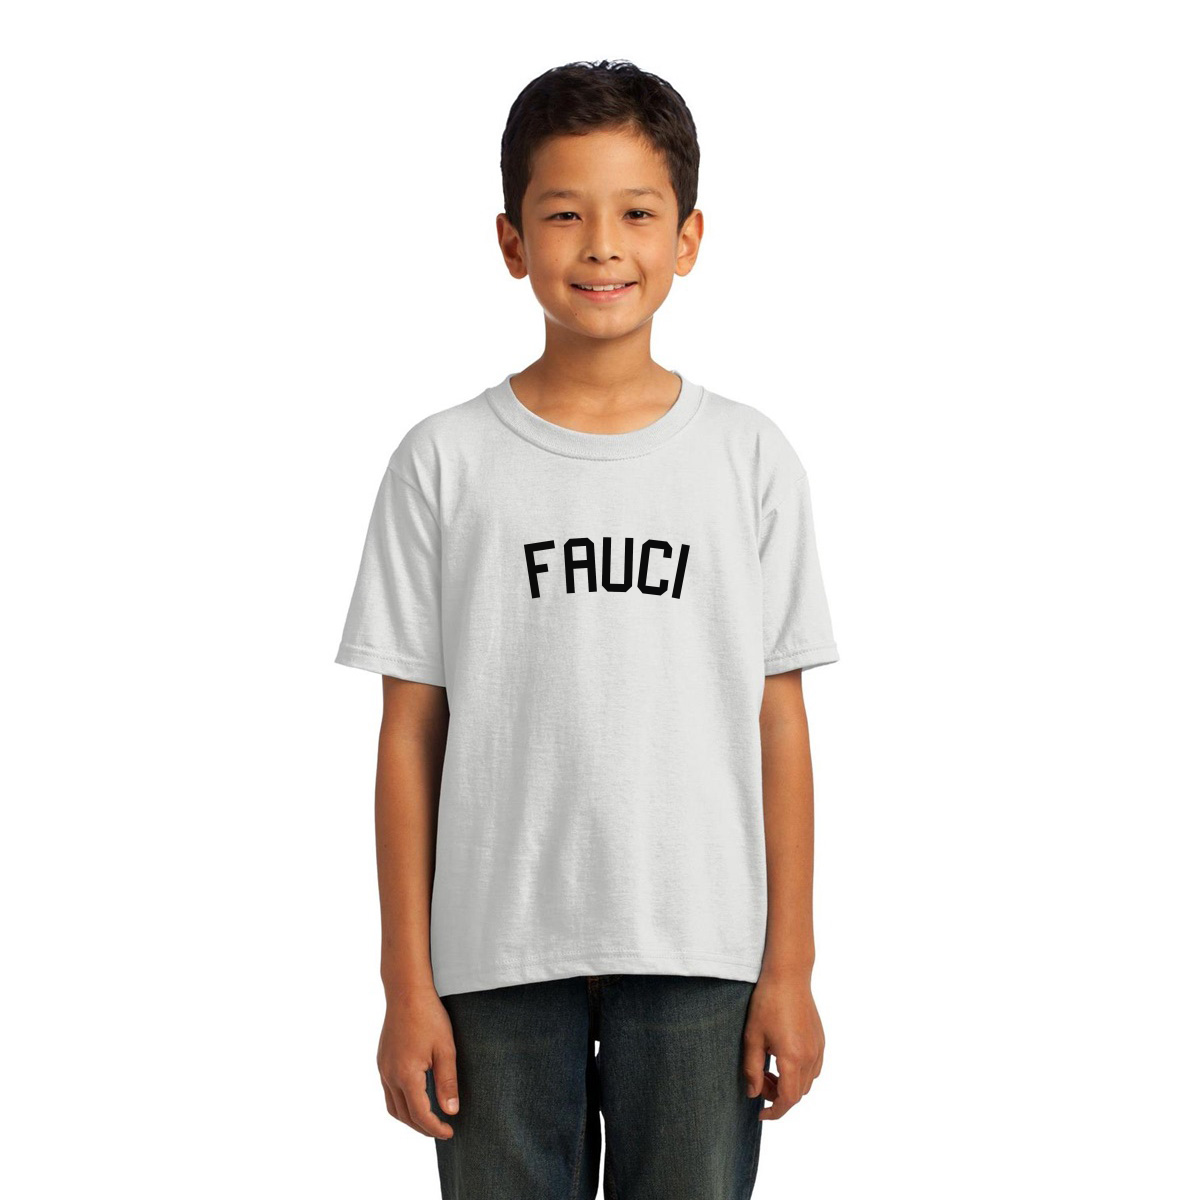 Fauci  Kids T-shirt | White